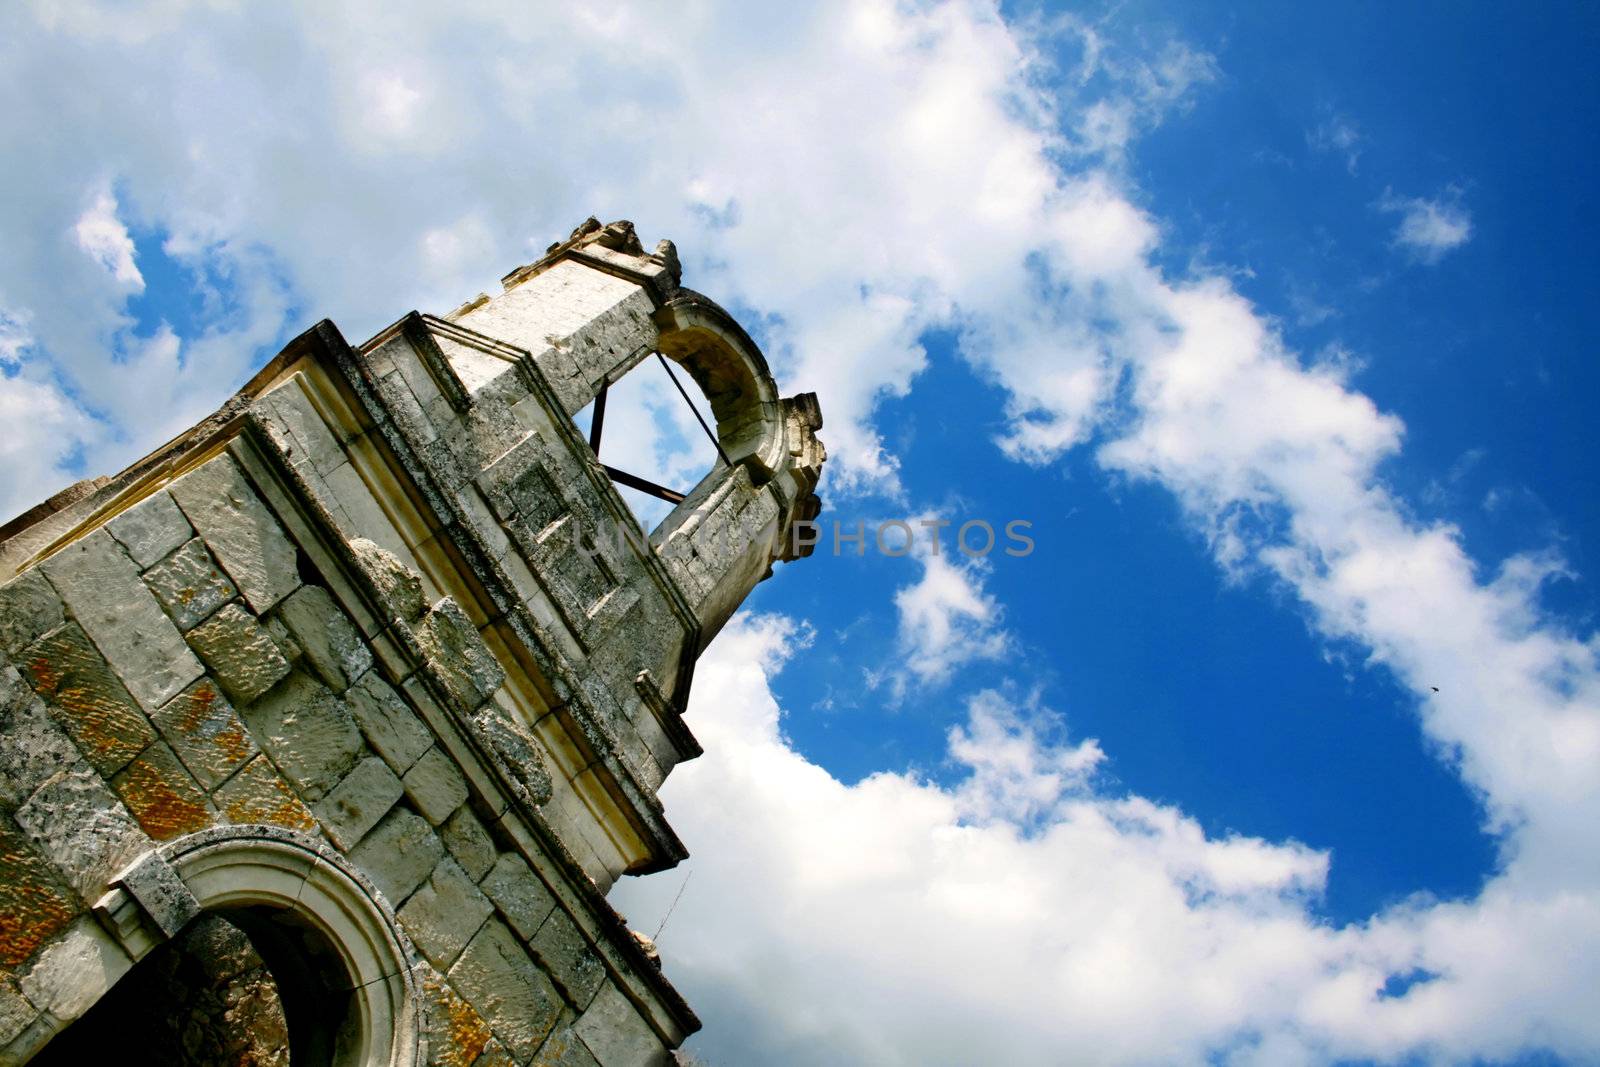 Ruins of an old church against a blue sky